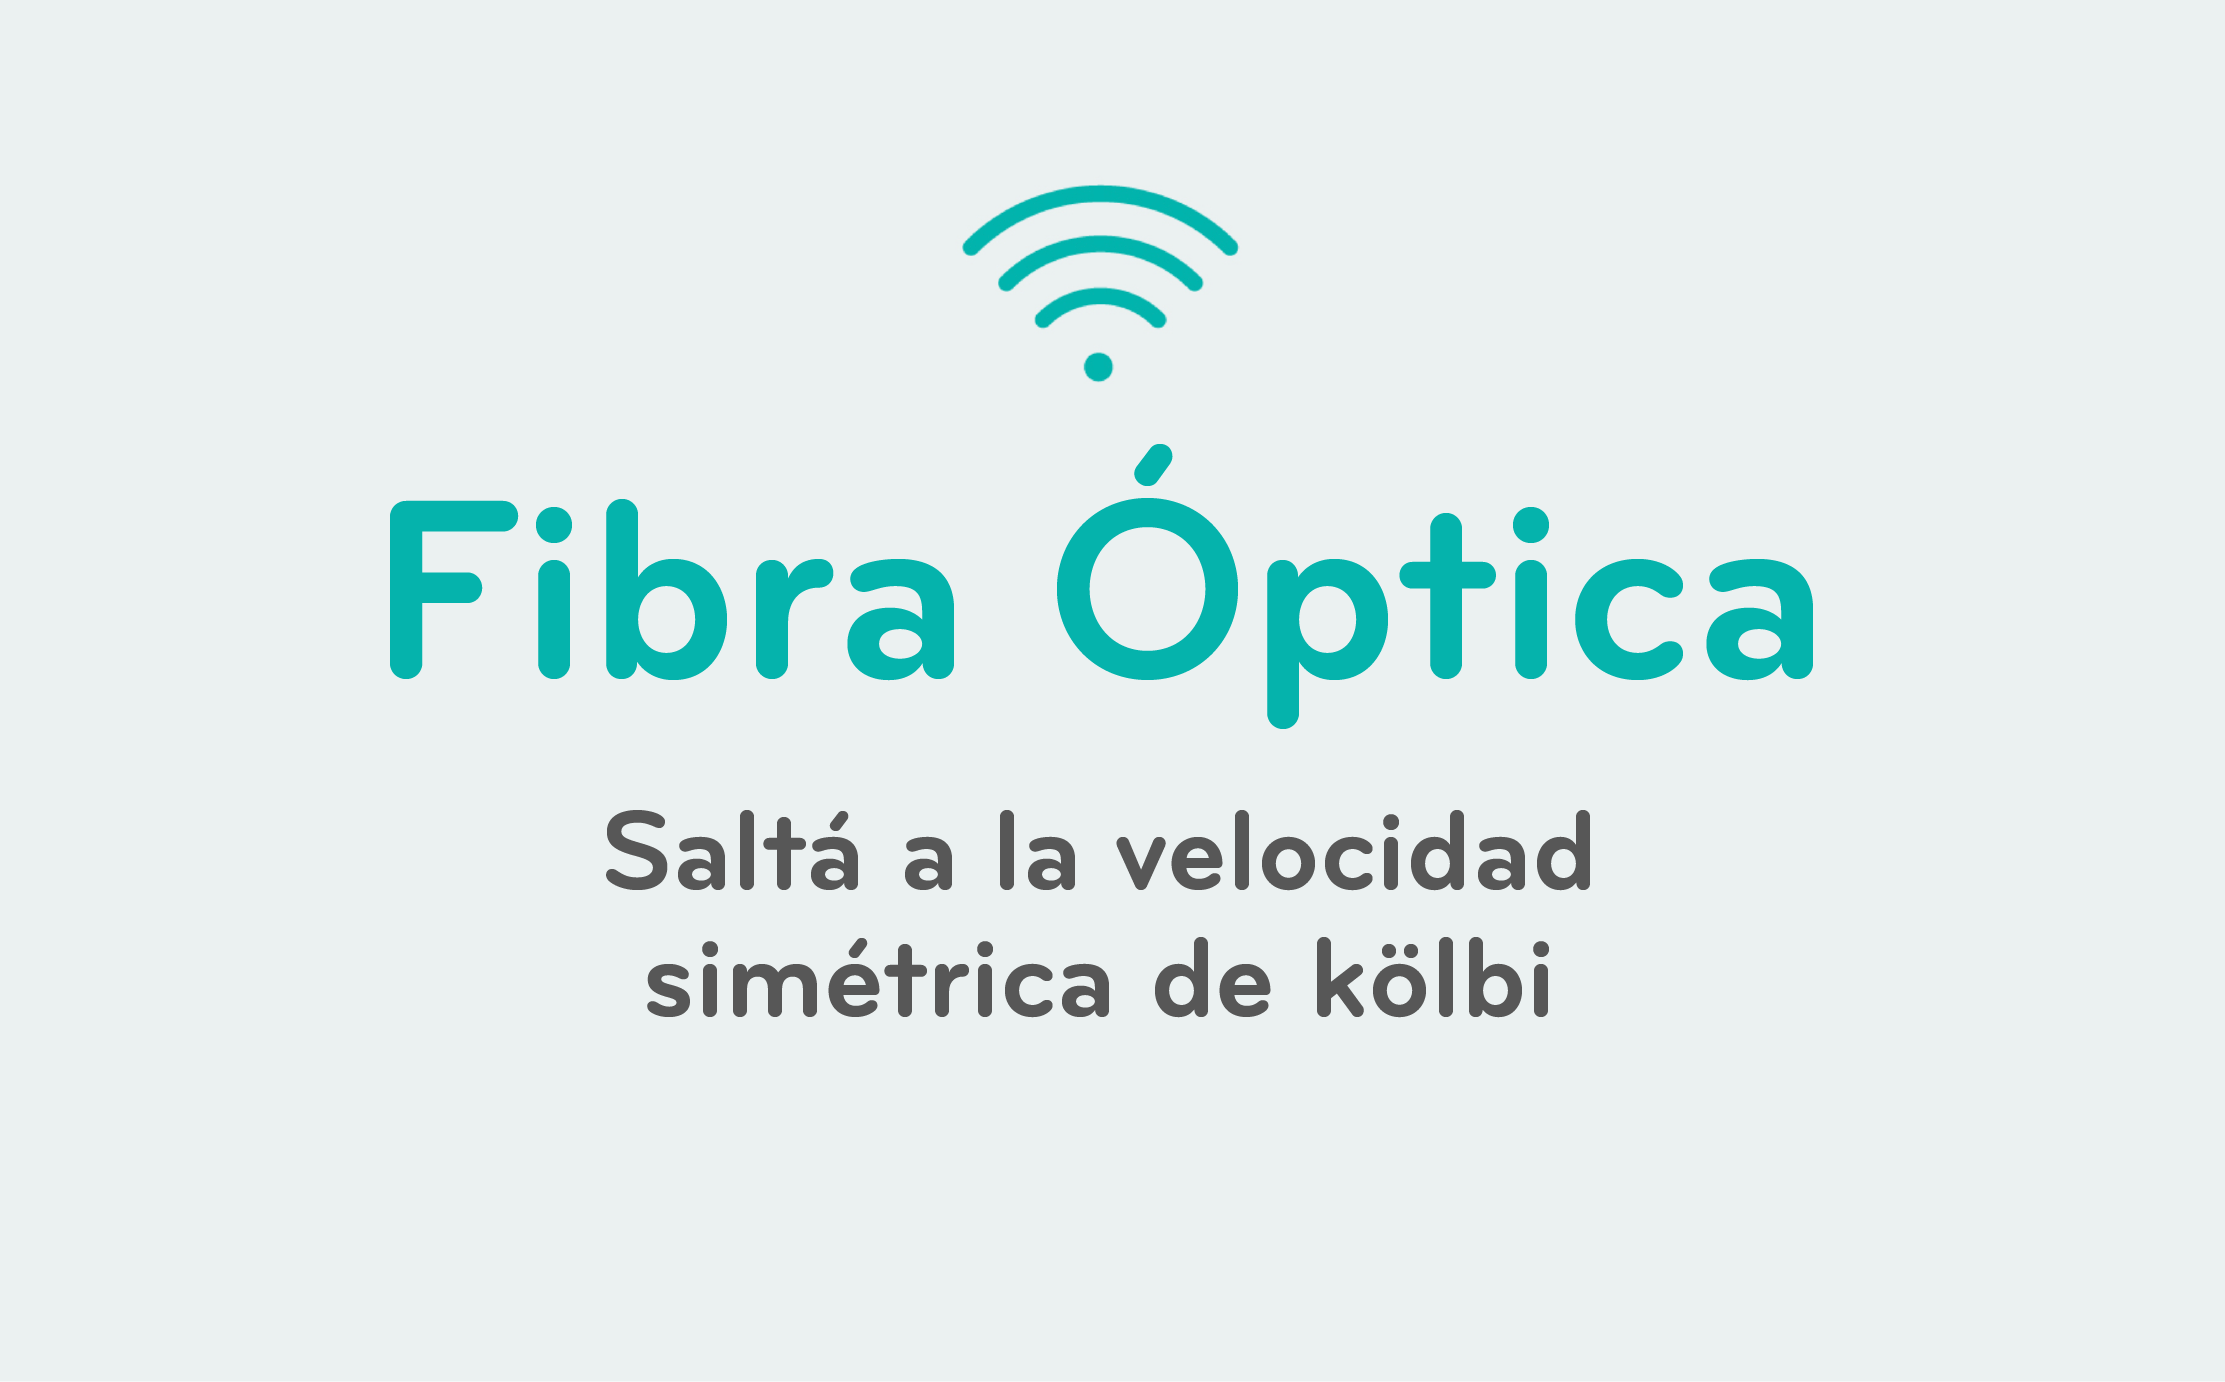 Saltá a la velocidad simétrica de la fibra óptica de kölbi